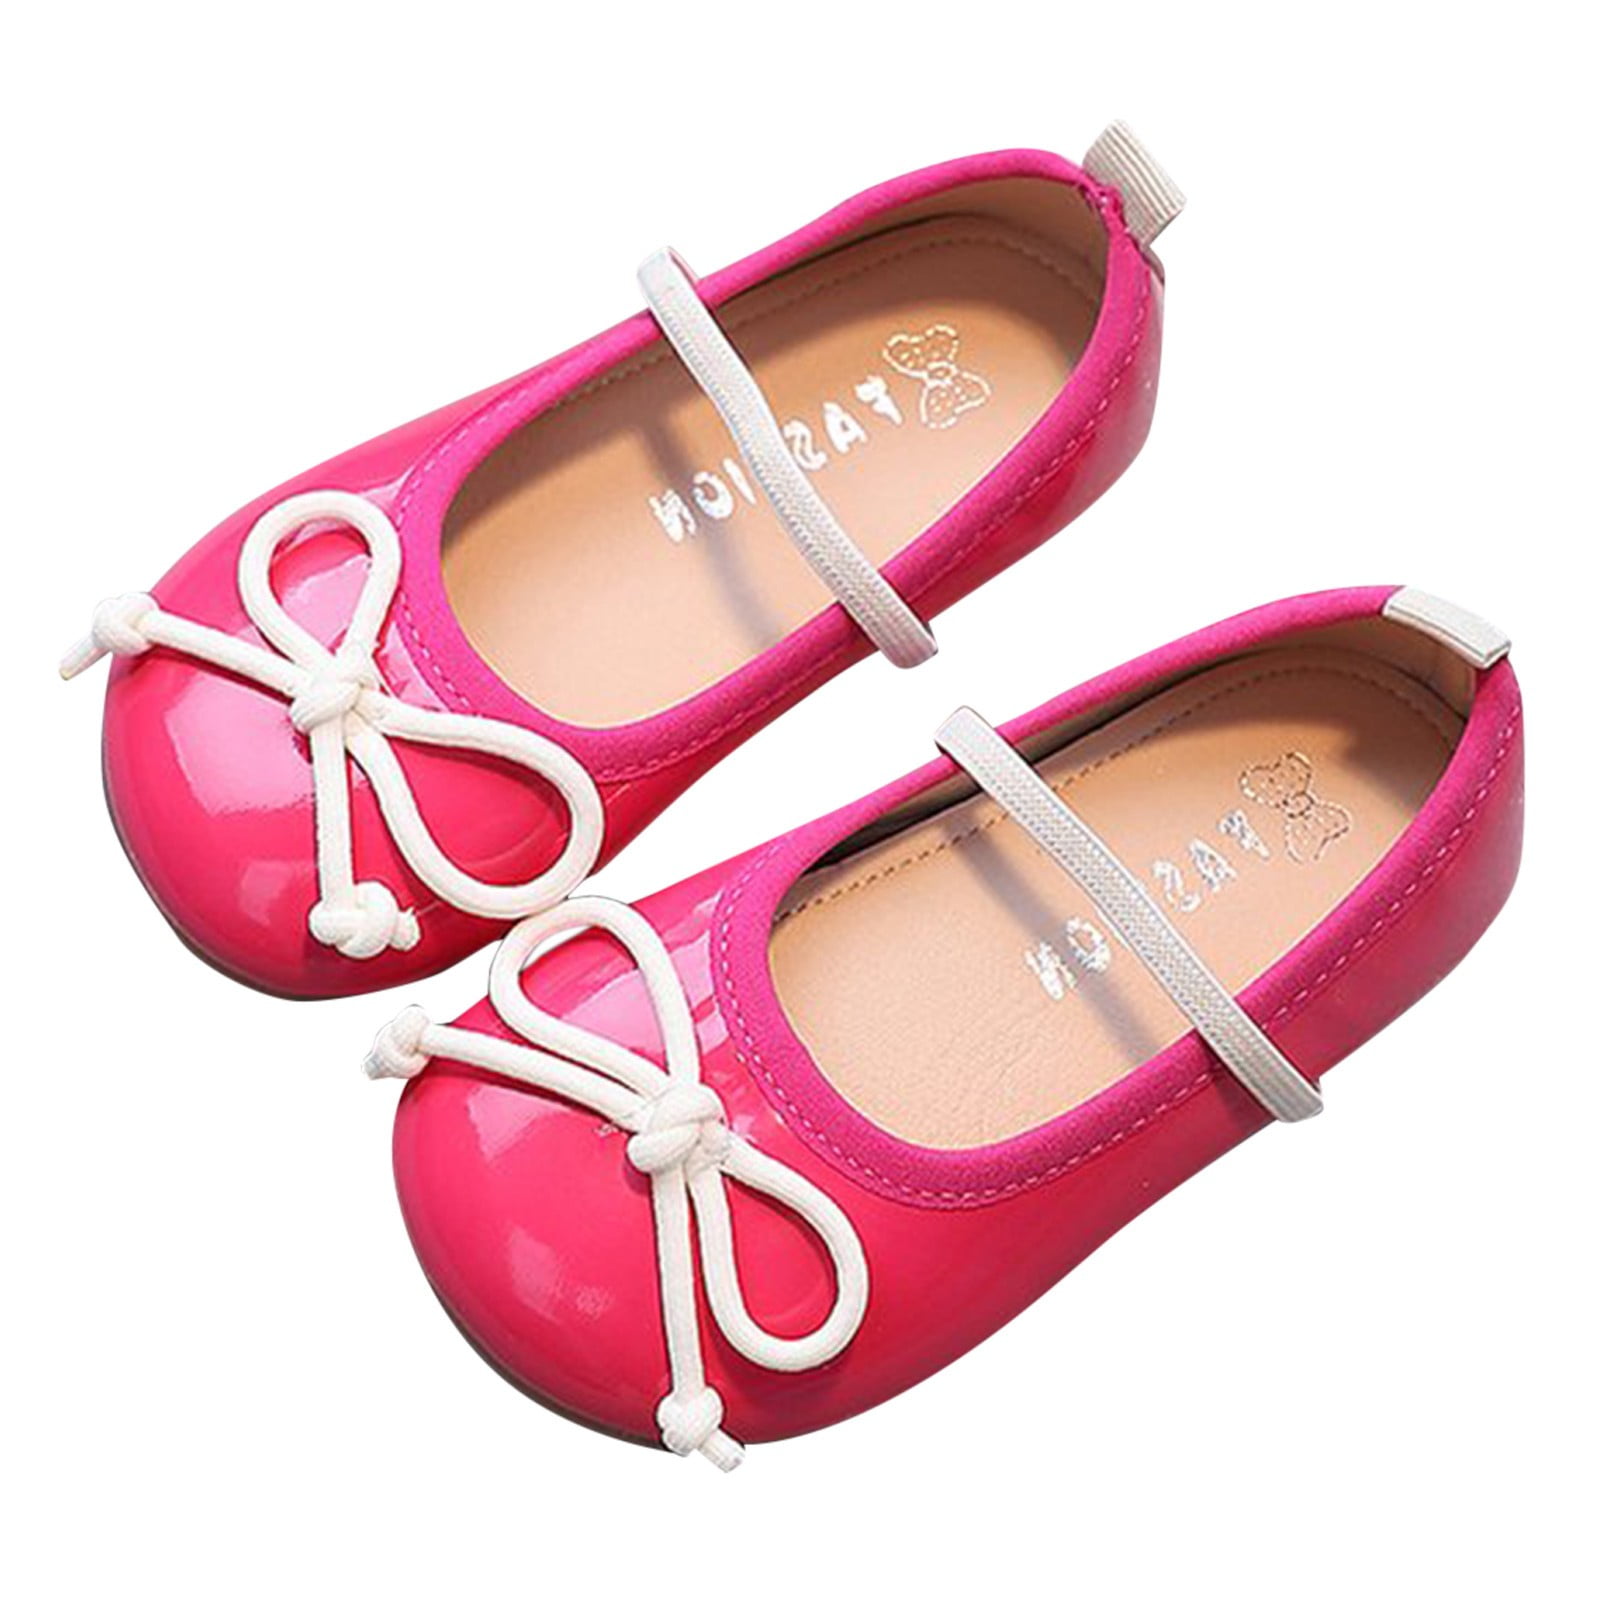 KaLI_store Girls' Sandals Girls Flat Sandals Princess Open Toe Sandal with  Adjustable Strap Summer Flat Shoes Pink,11